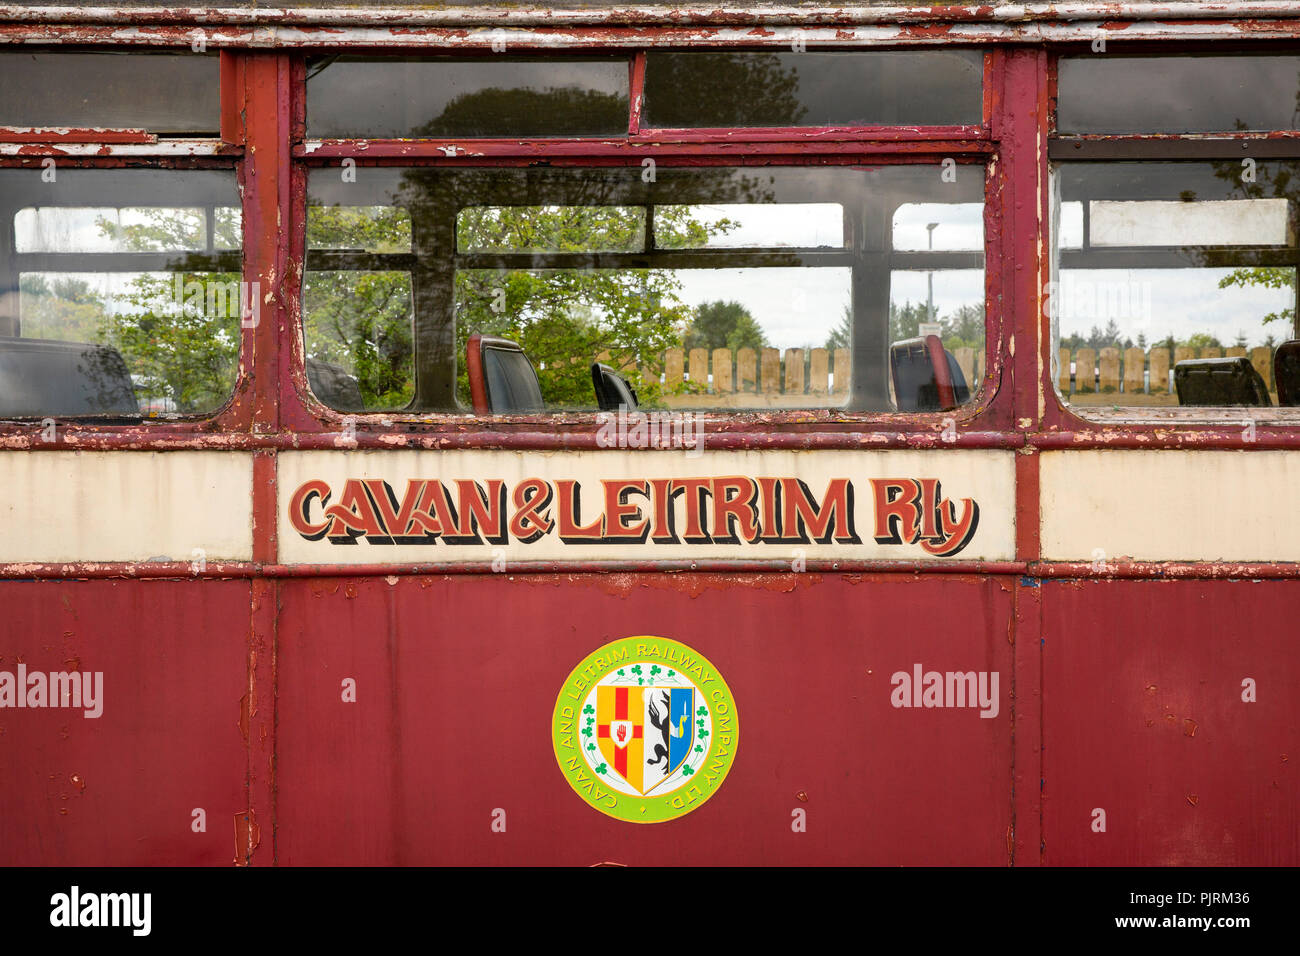 Ireland, Co Leitrim, Dromod, Cavan and Leitrim railway museum, logo on railway carriage Stock Photo